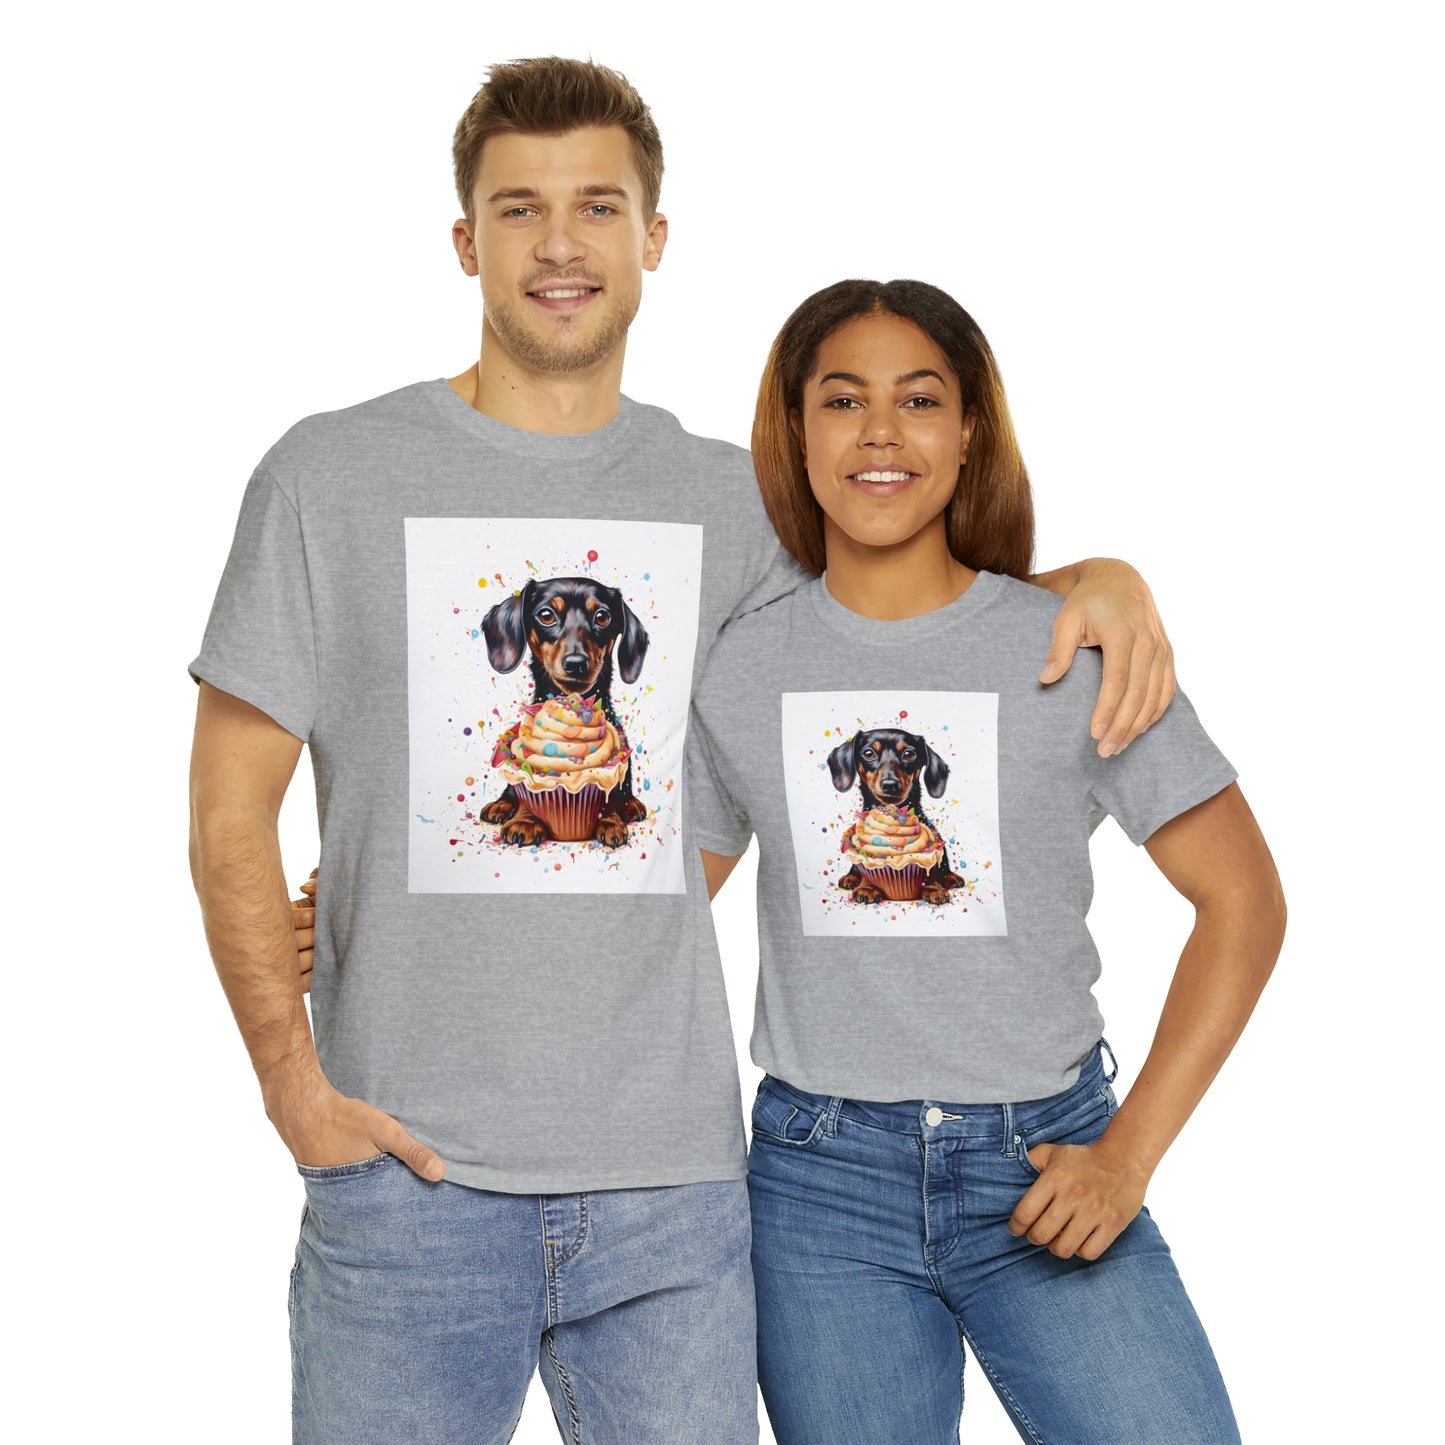 Dachshund Classic Cotton T-Shirt: "Pupcake"